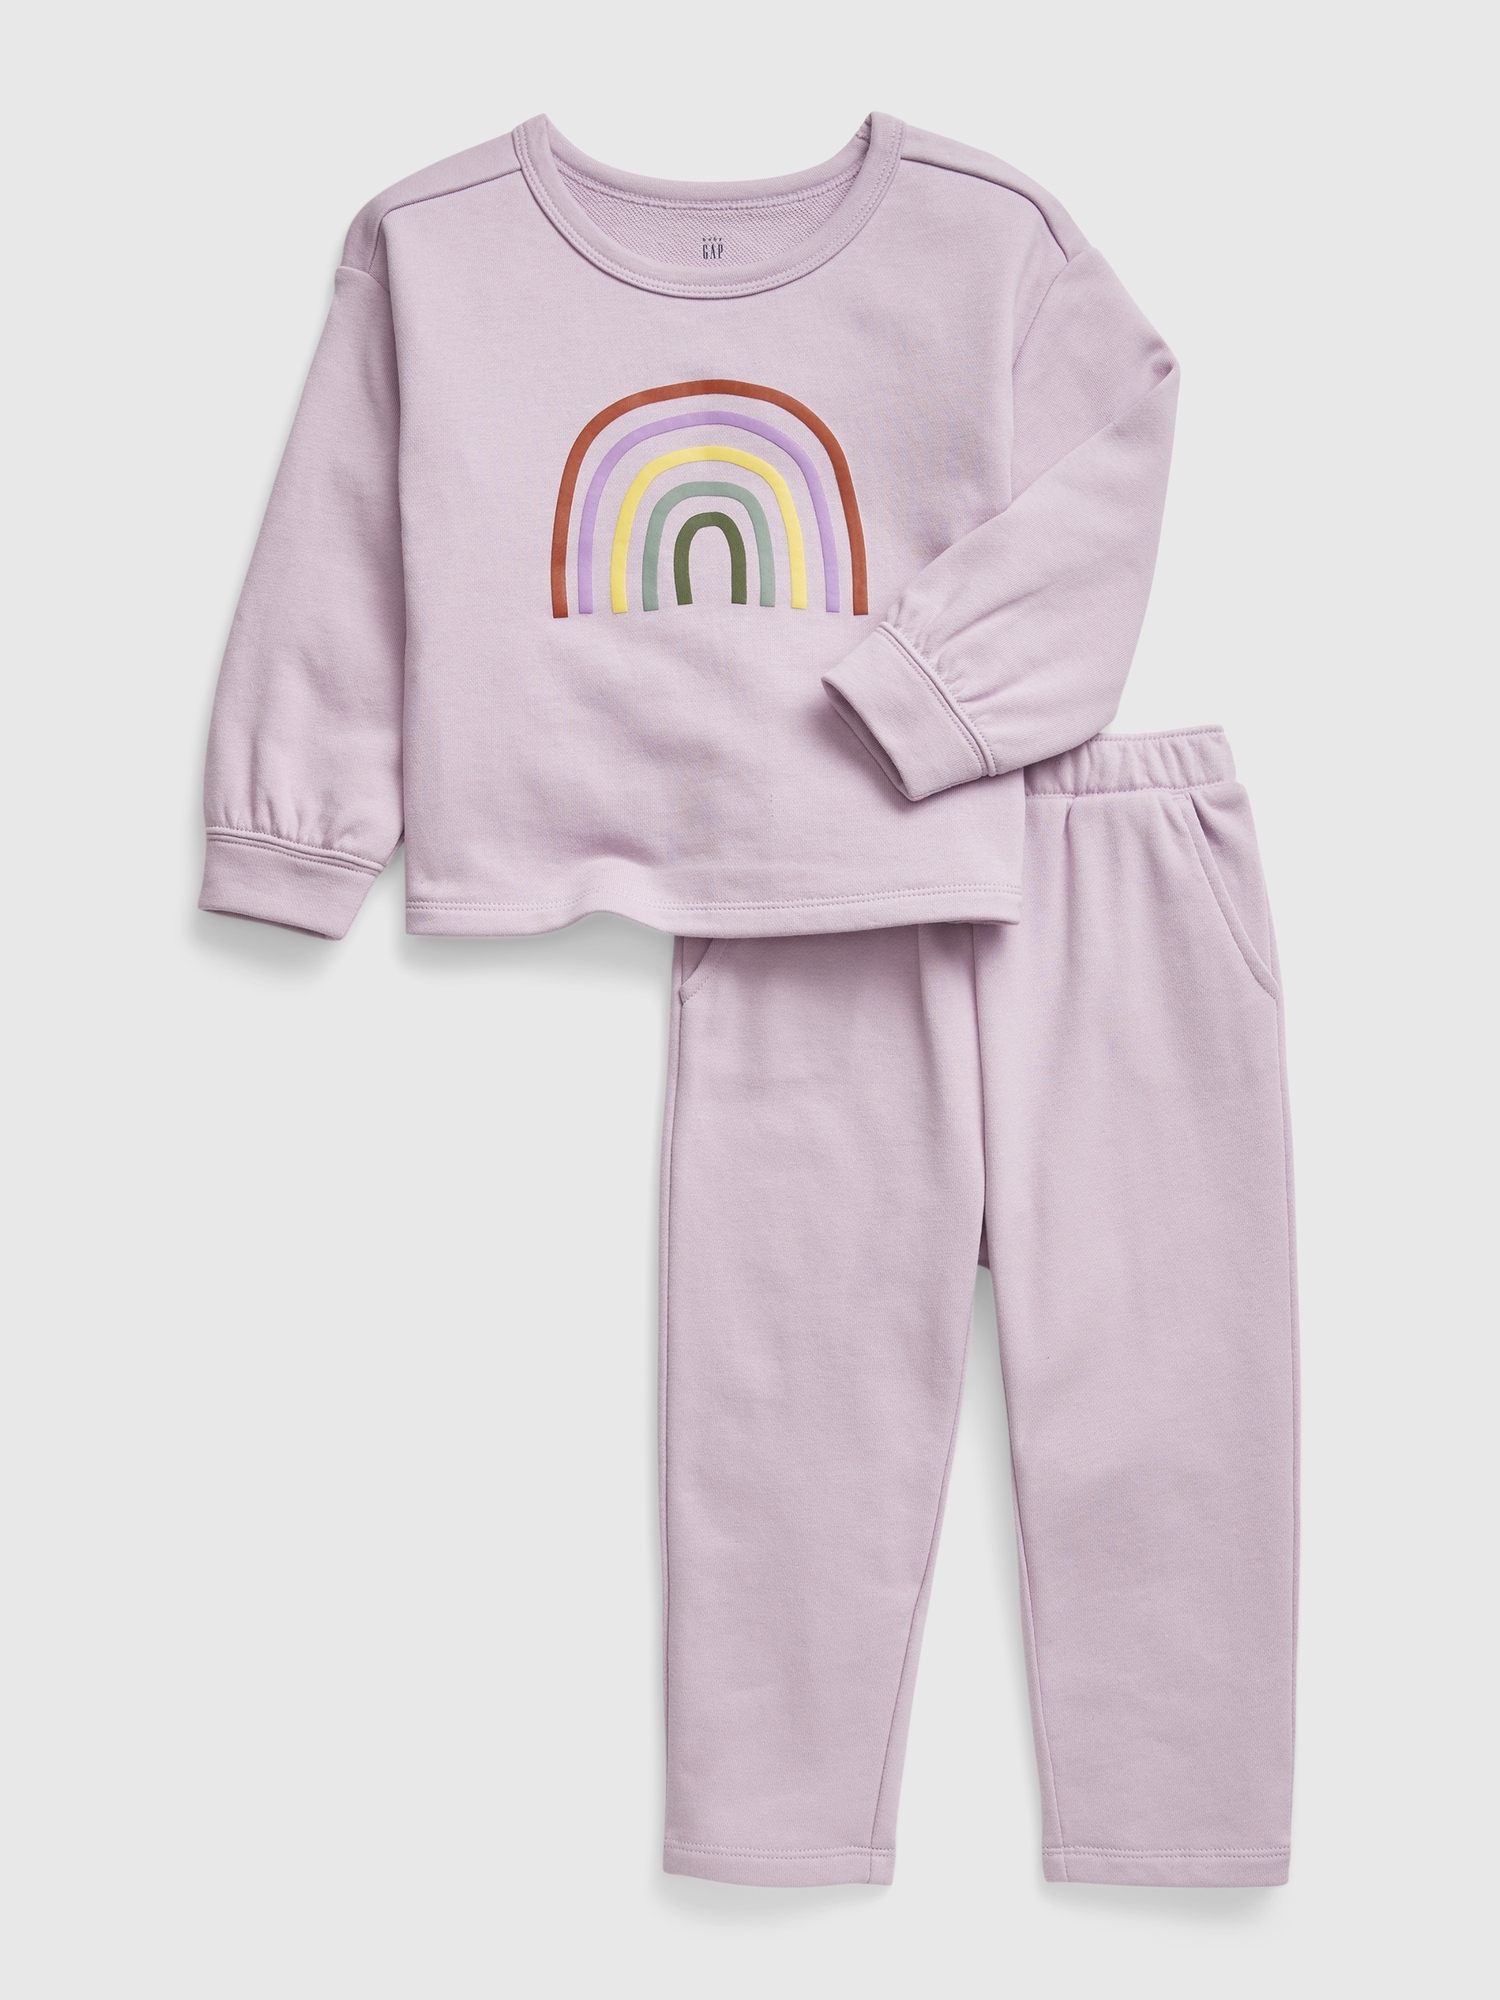 Toddler Rainbow Two-Piece Sweat Set | Gap